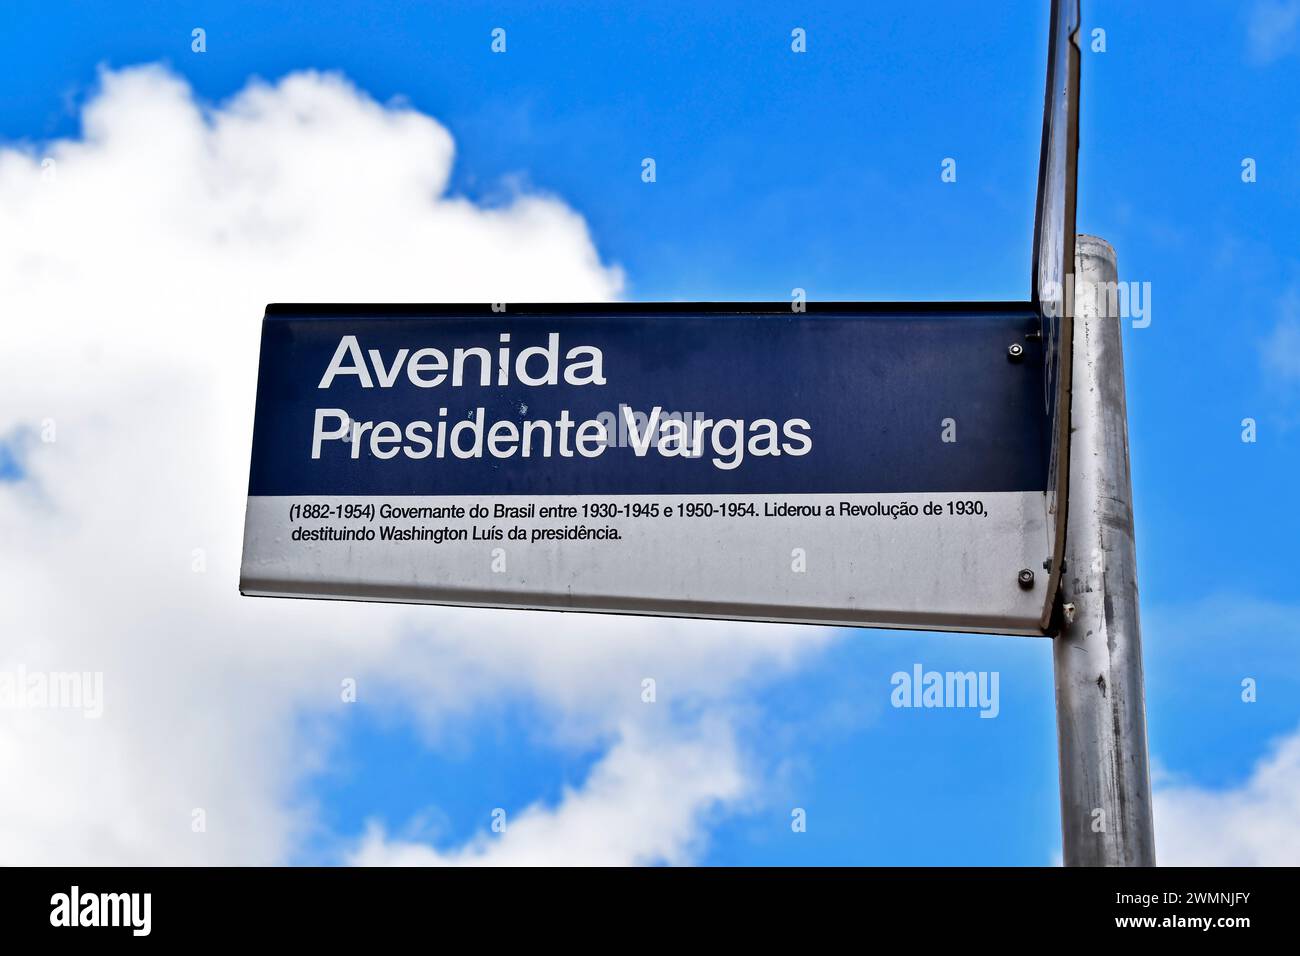 Street sign and blue sky with clouds, Ribeirao Preto, Sao Paulo, Brazil Stock Photo